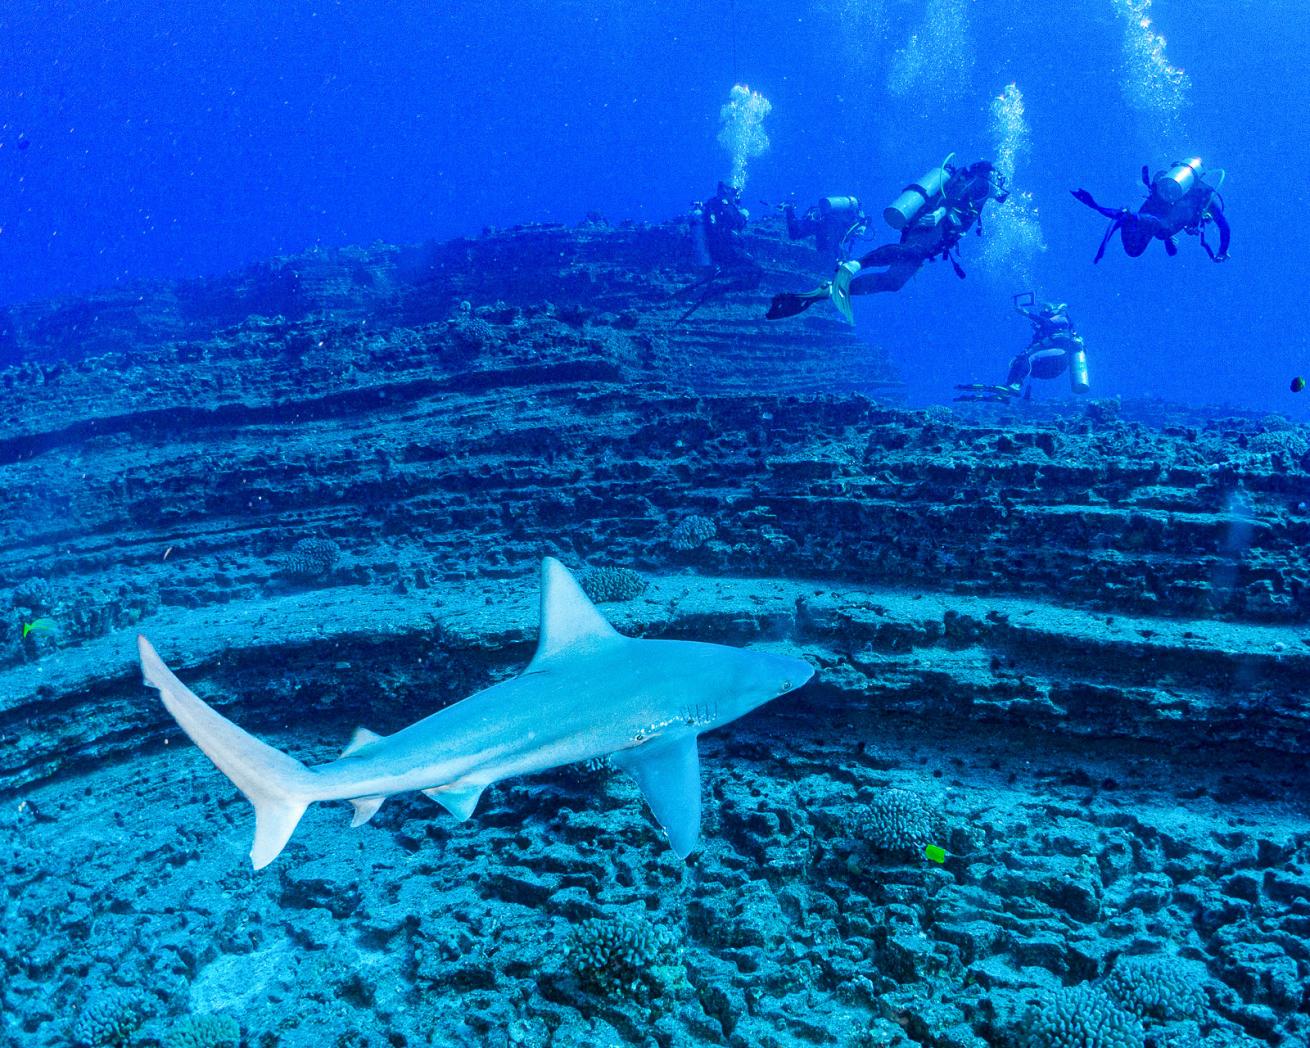 A group of scuba divers swimming near a shark.